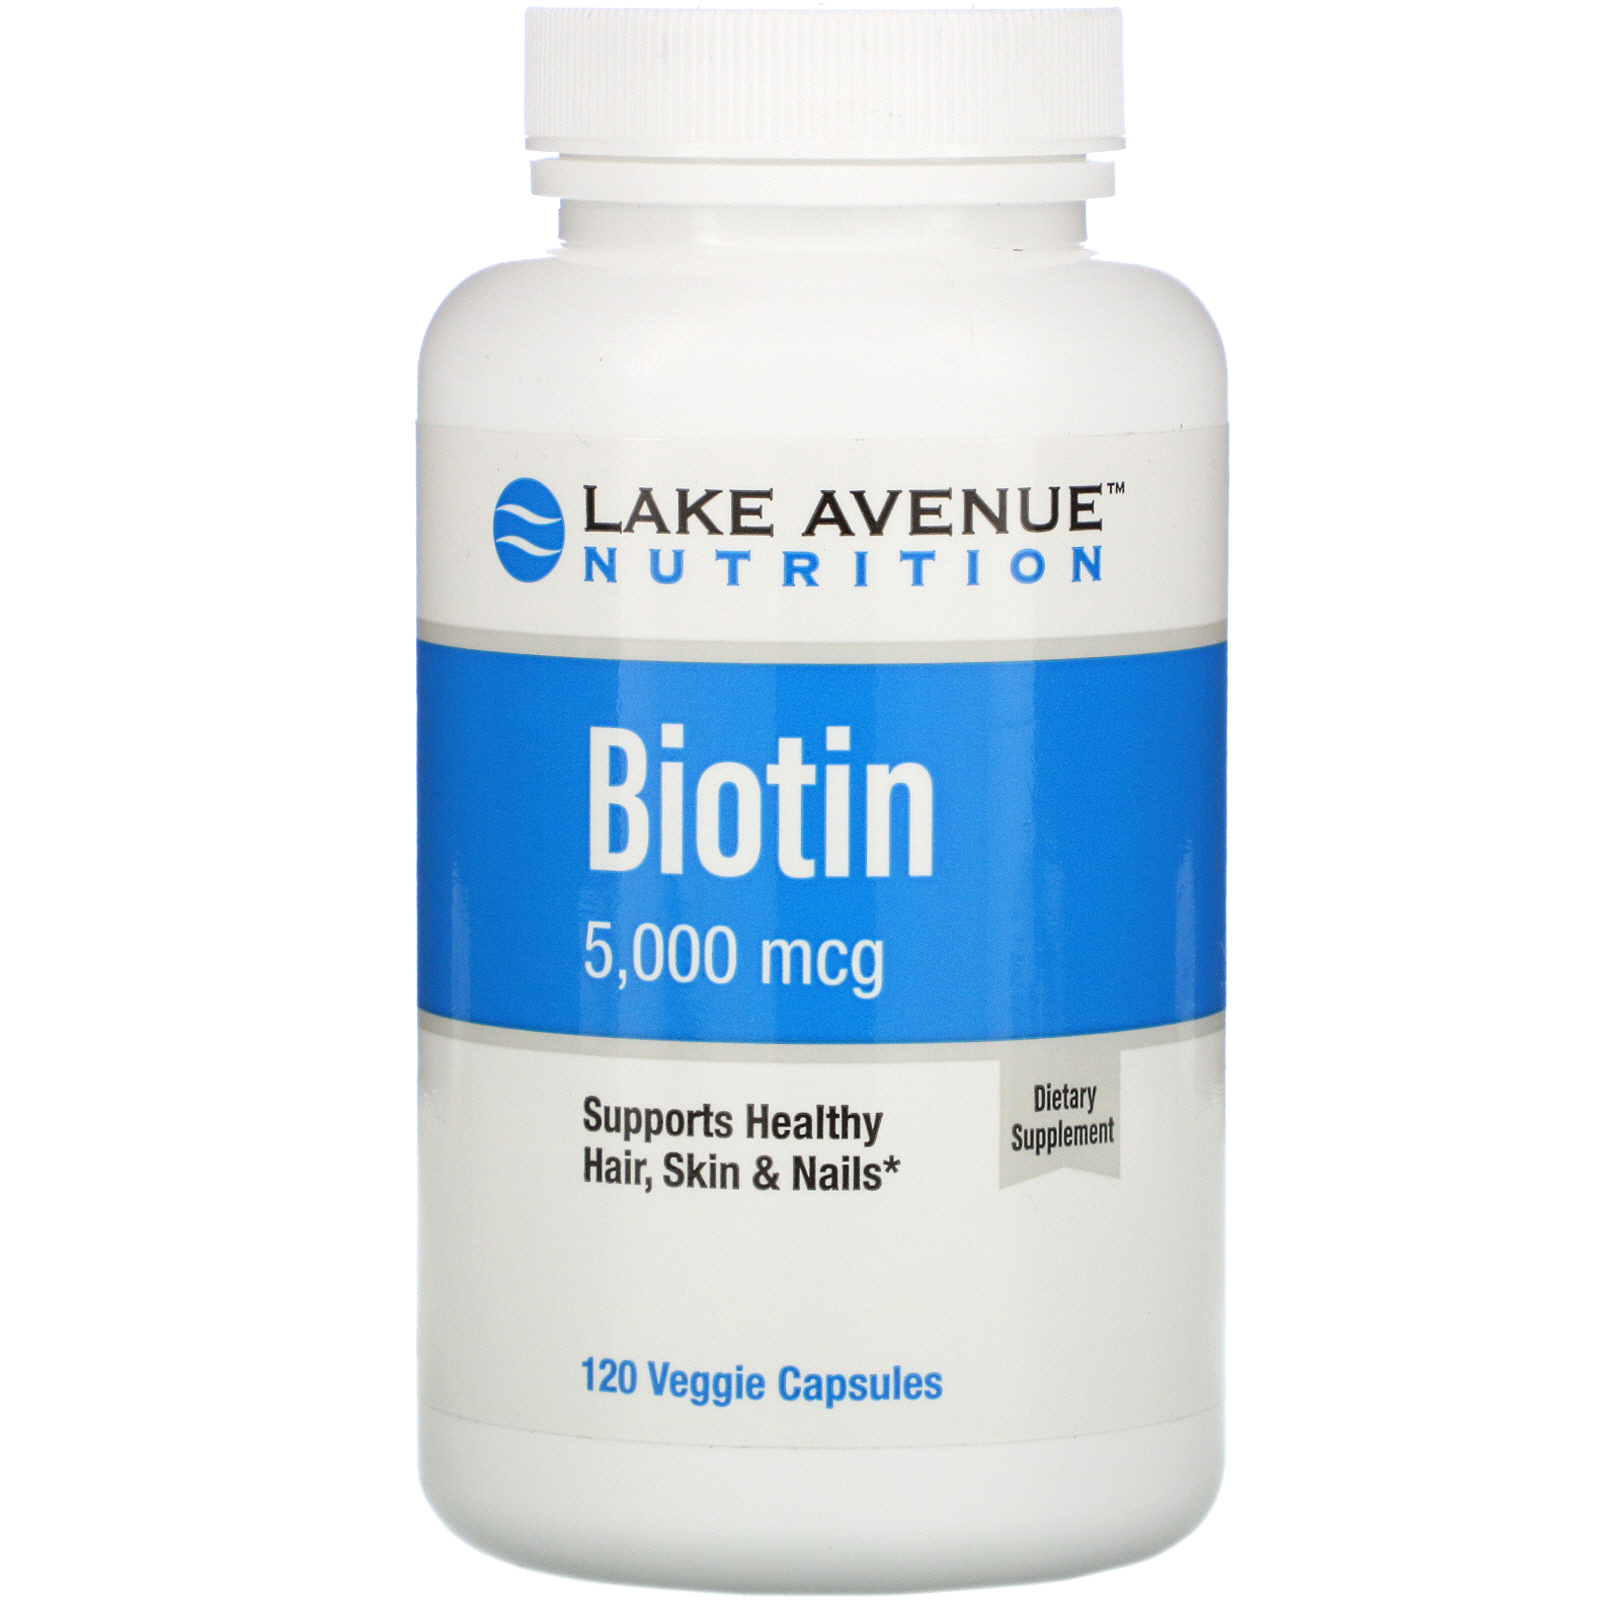 Biotin, 5,000 mcg, 120 Veggie Capsules 898220016754 | eBay